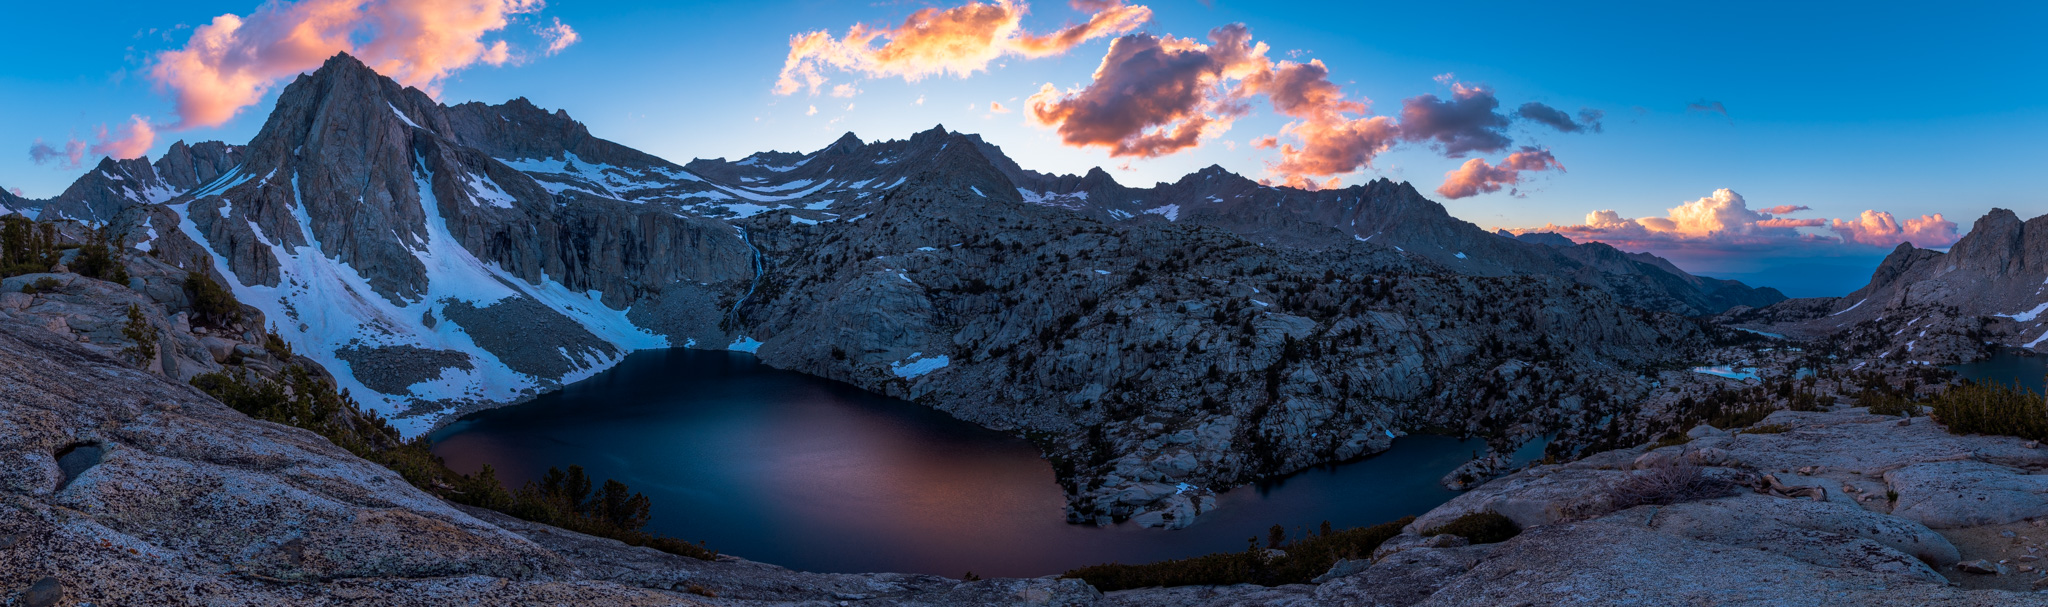 Sunset at the Sabrina Basin the The Sierras. Photo by Brock Dallman